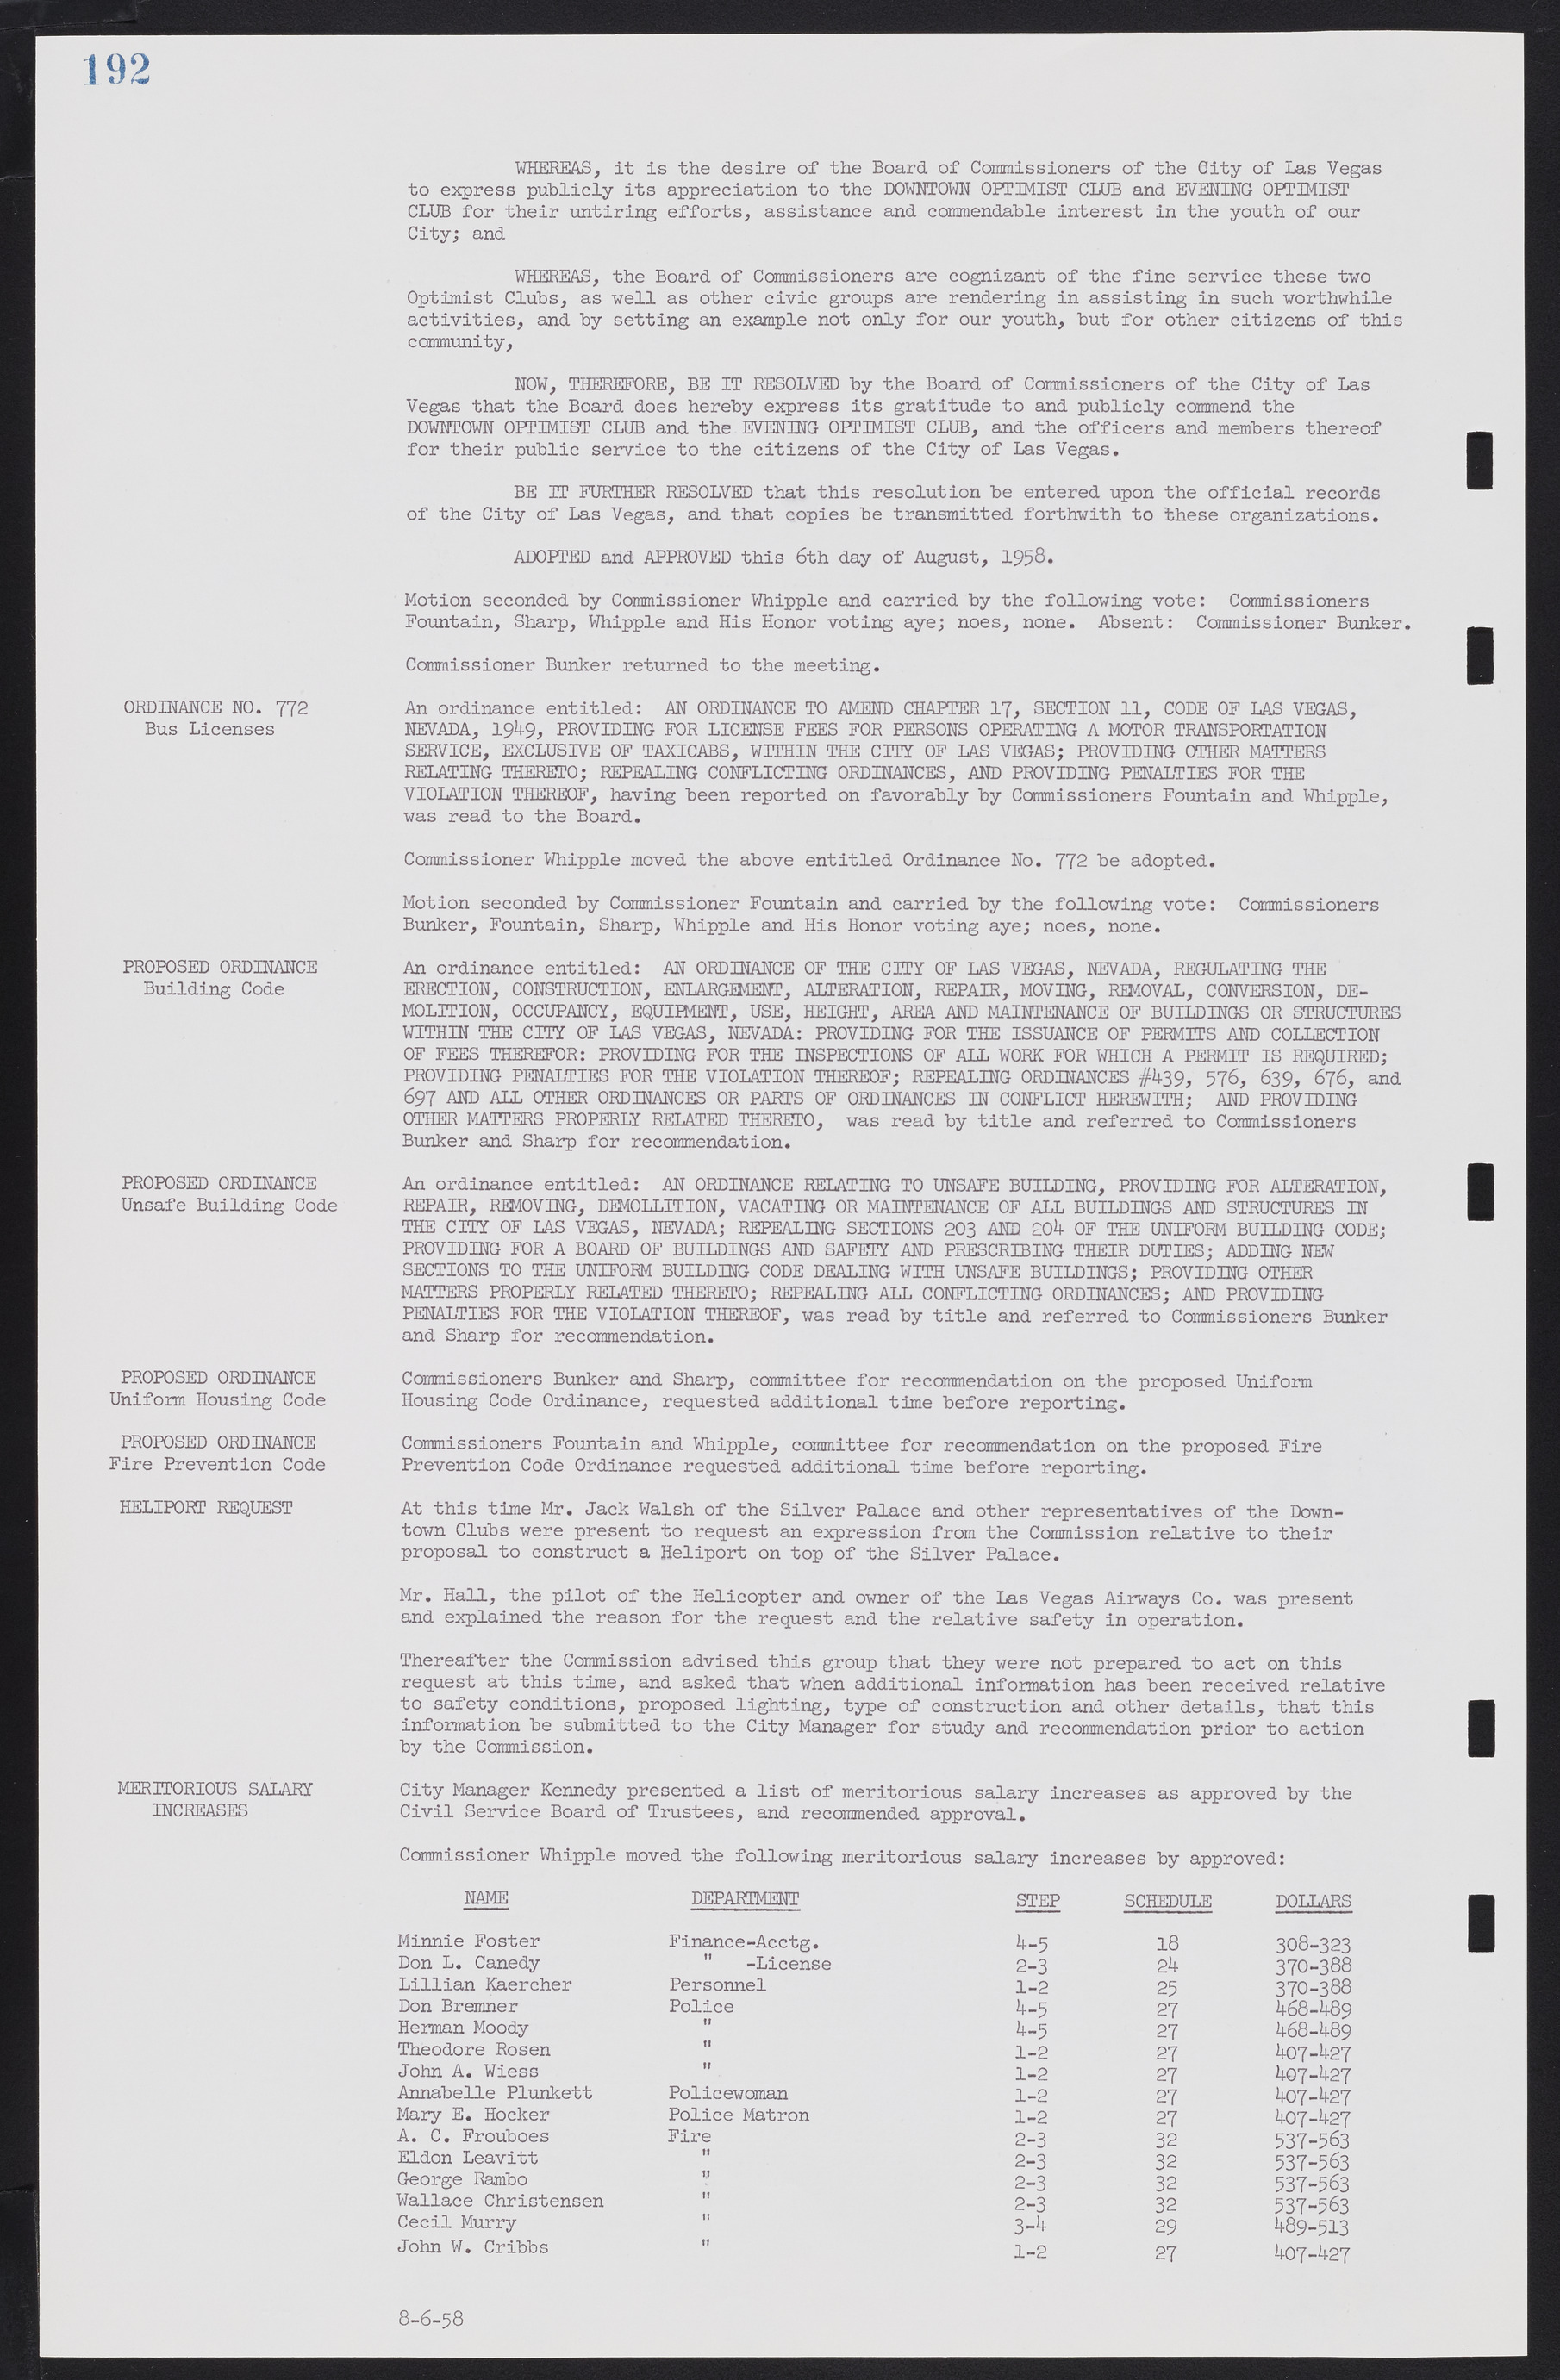 Las Vegas City Commission Minutes, November 20, 1957 to December 2, 1959, lvc000011-196